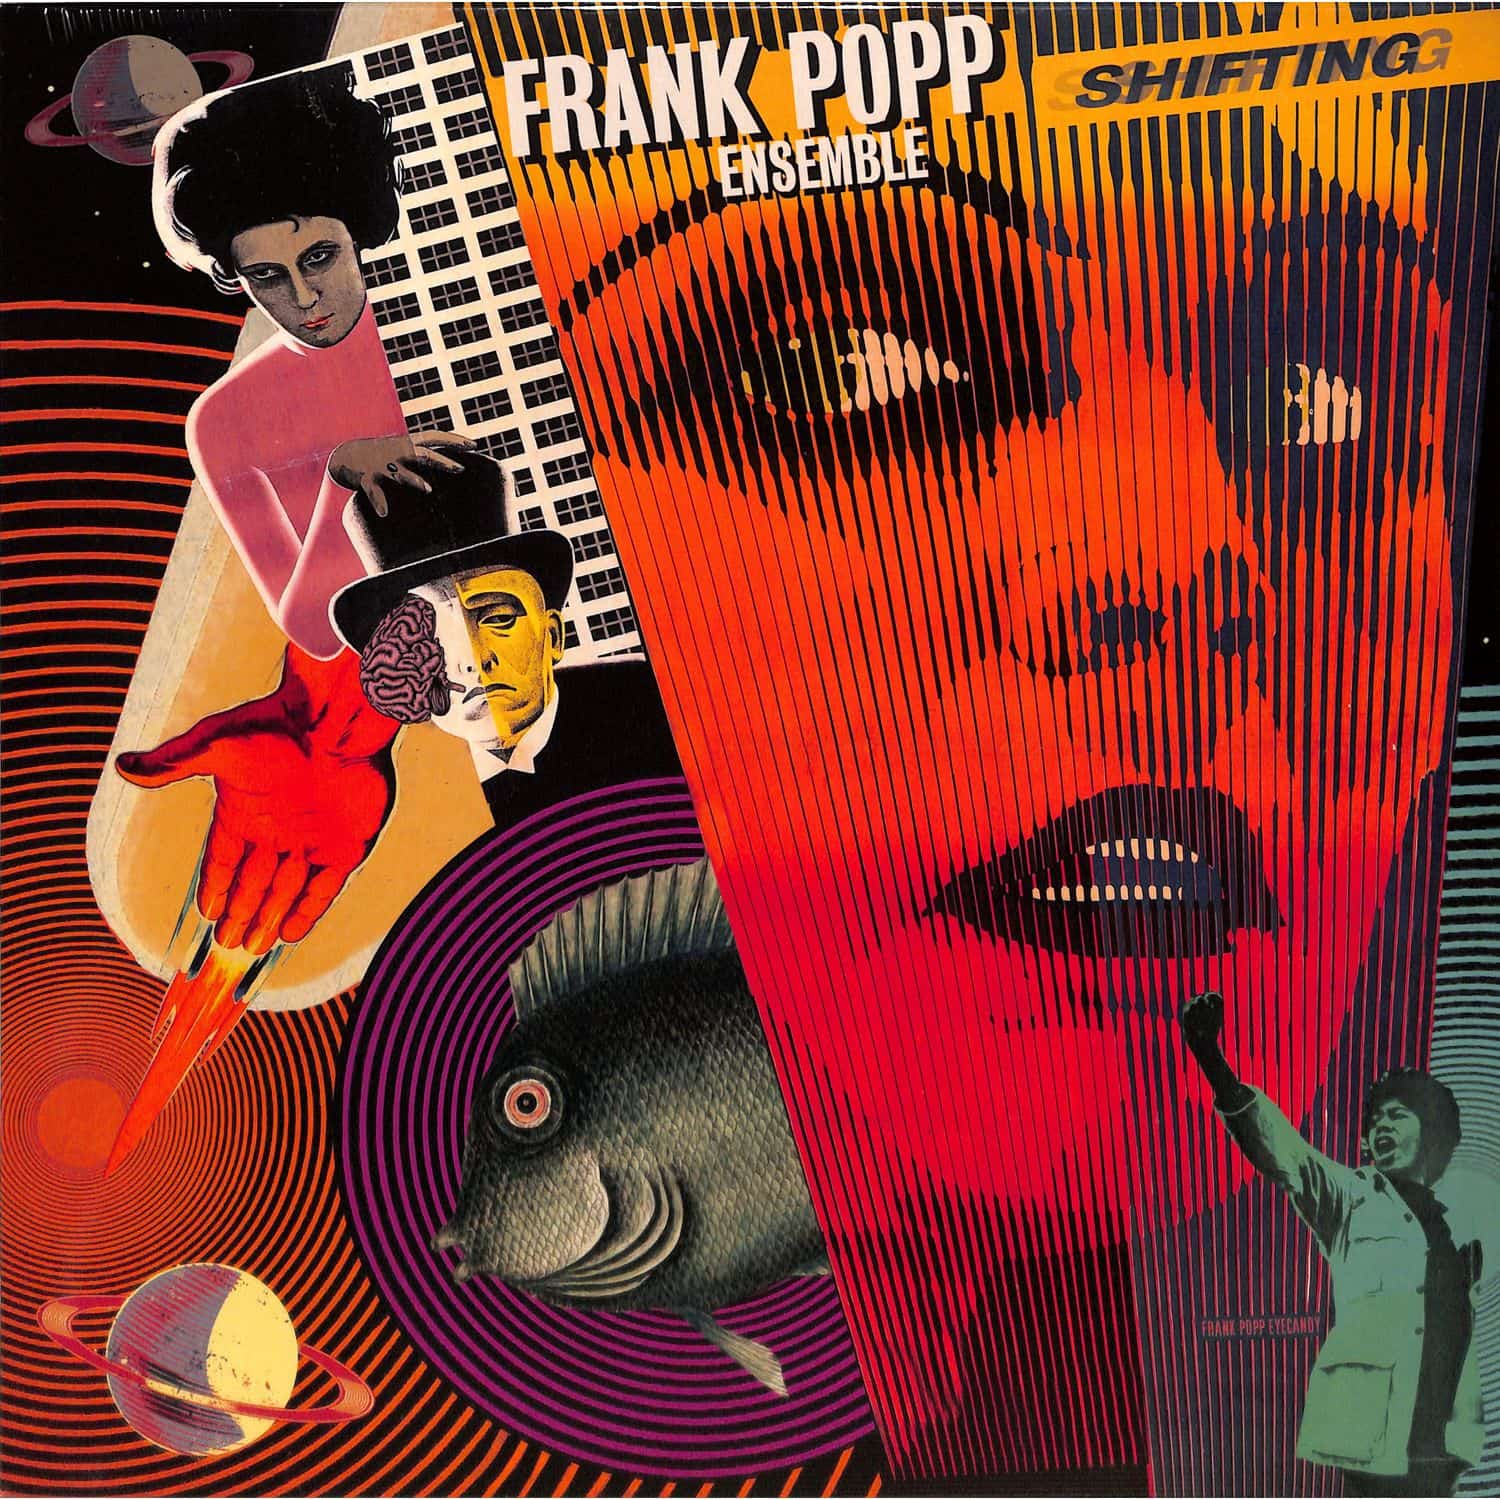 Frank-Ensemble- Popp - SHIFTING 